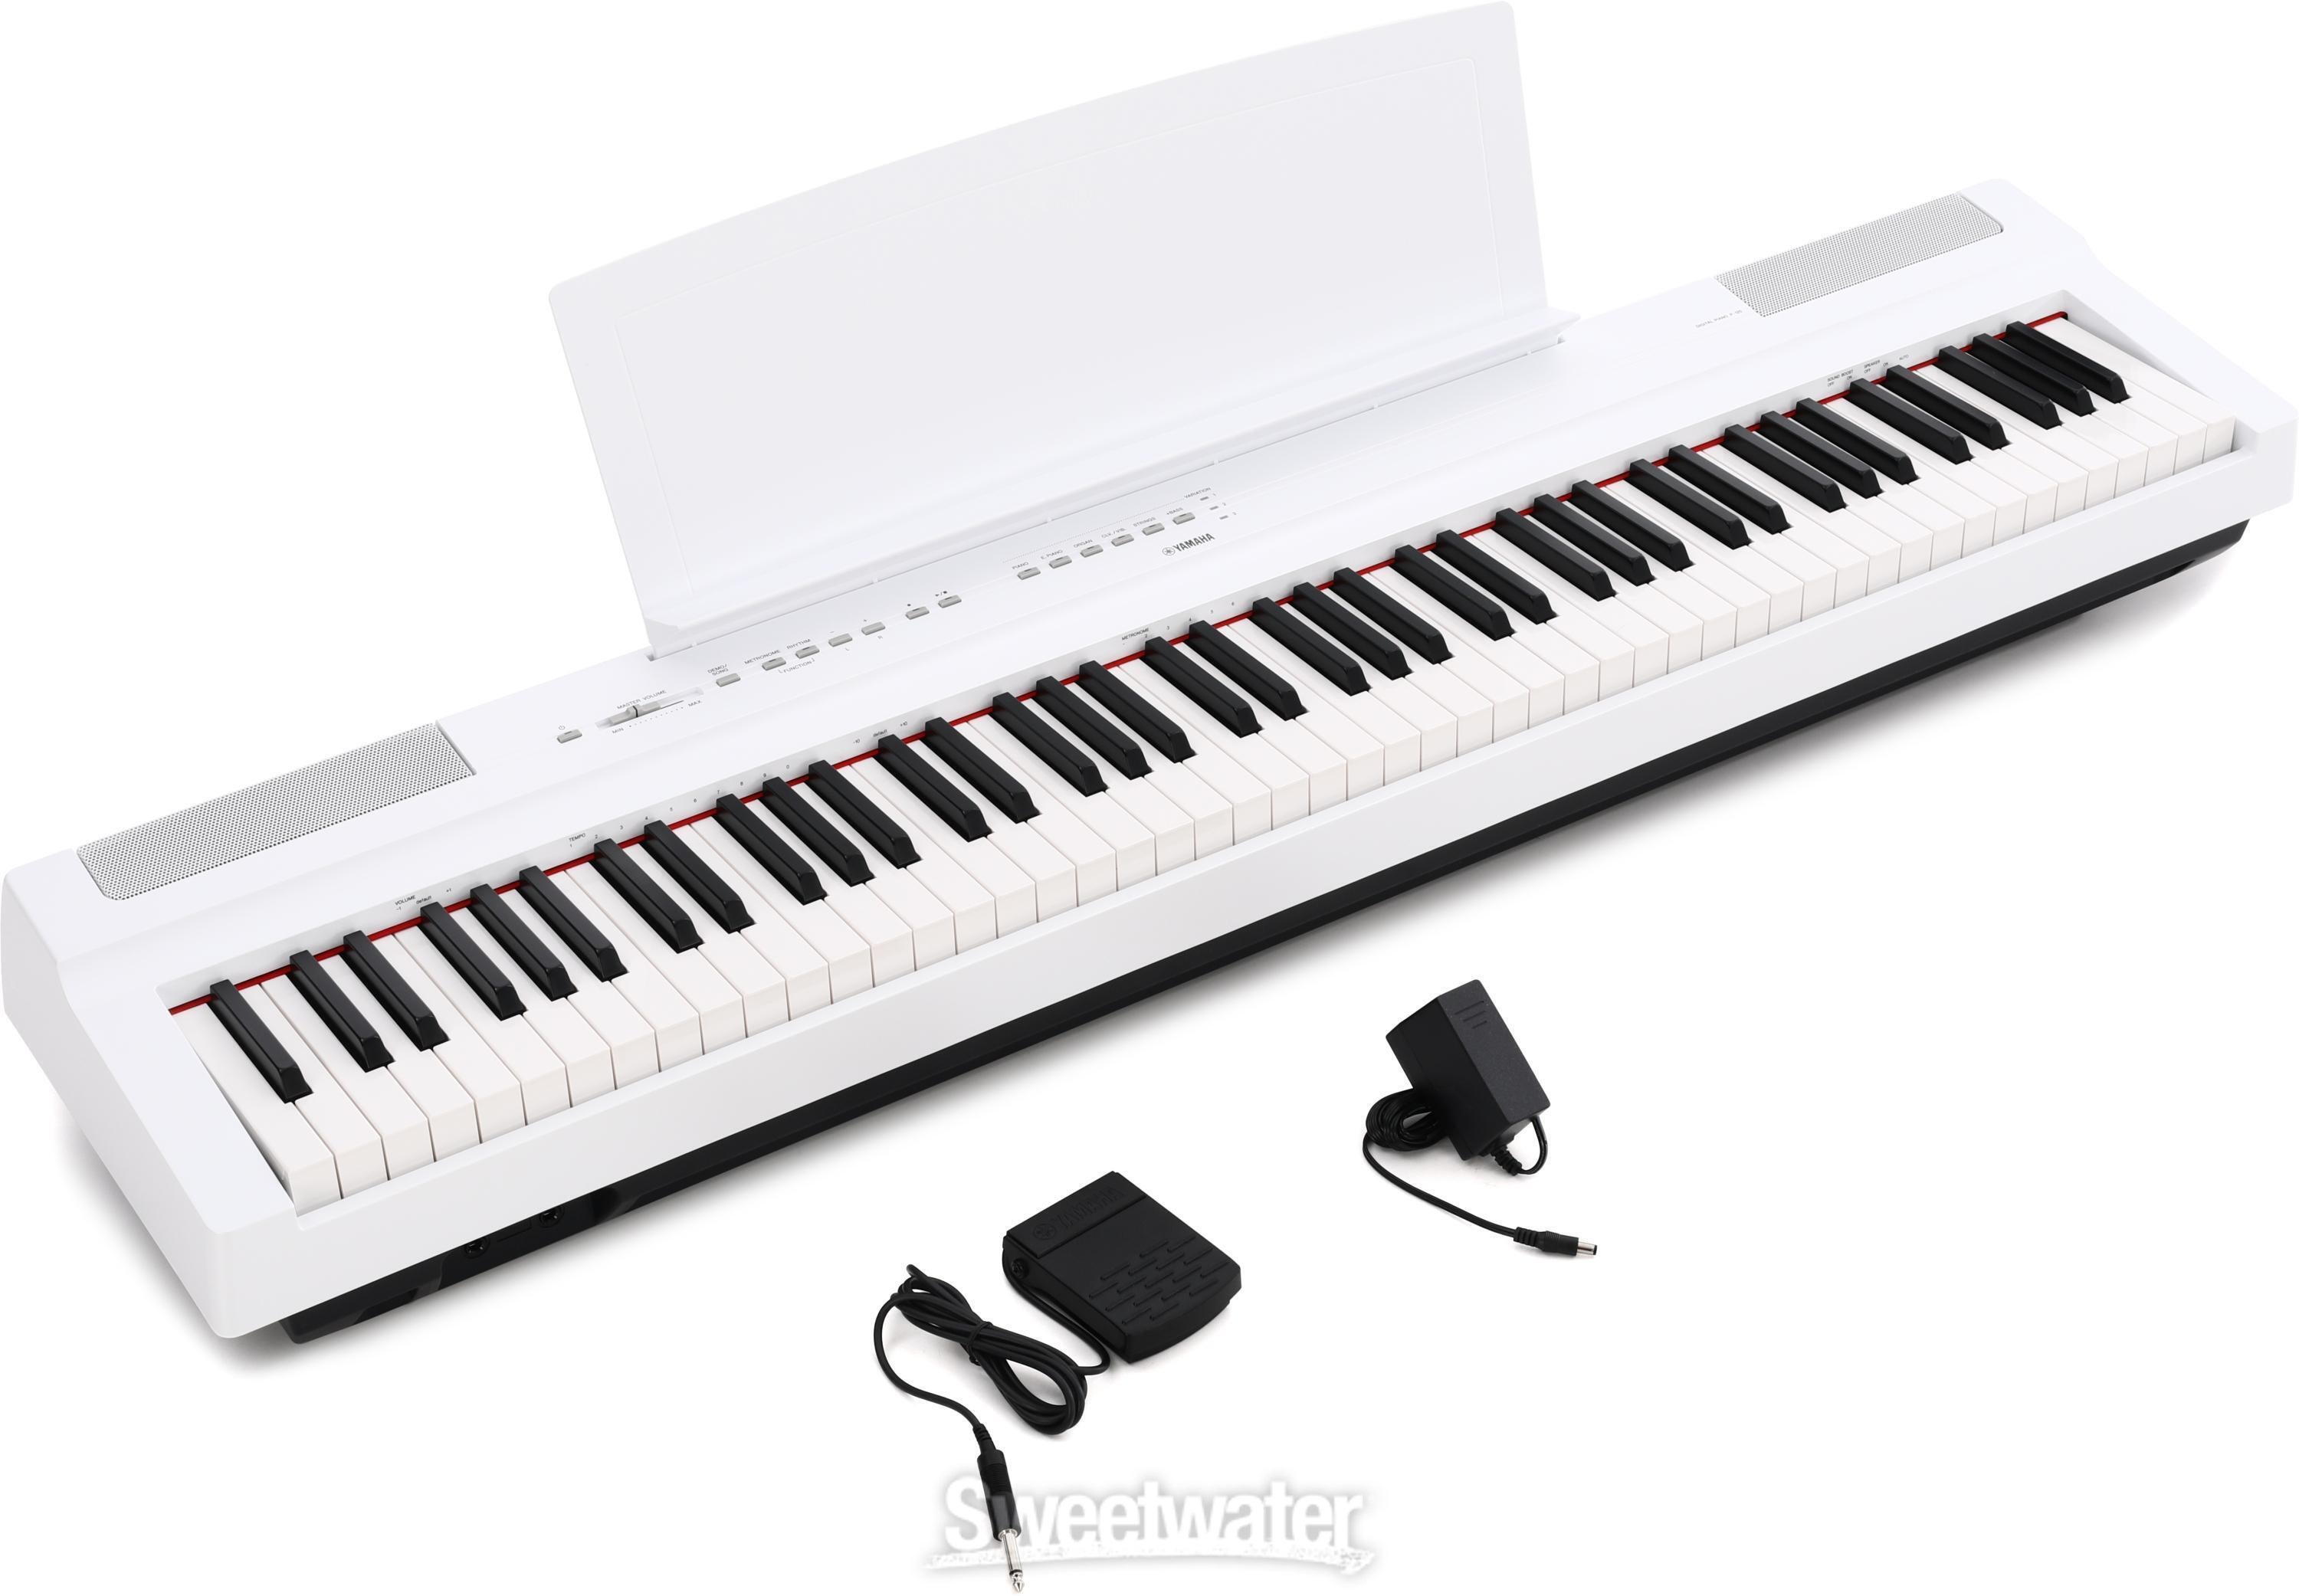 Yamaha P-125 88-key Digital Piano with Speakers - White Reviews